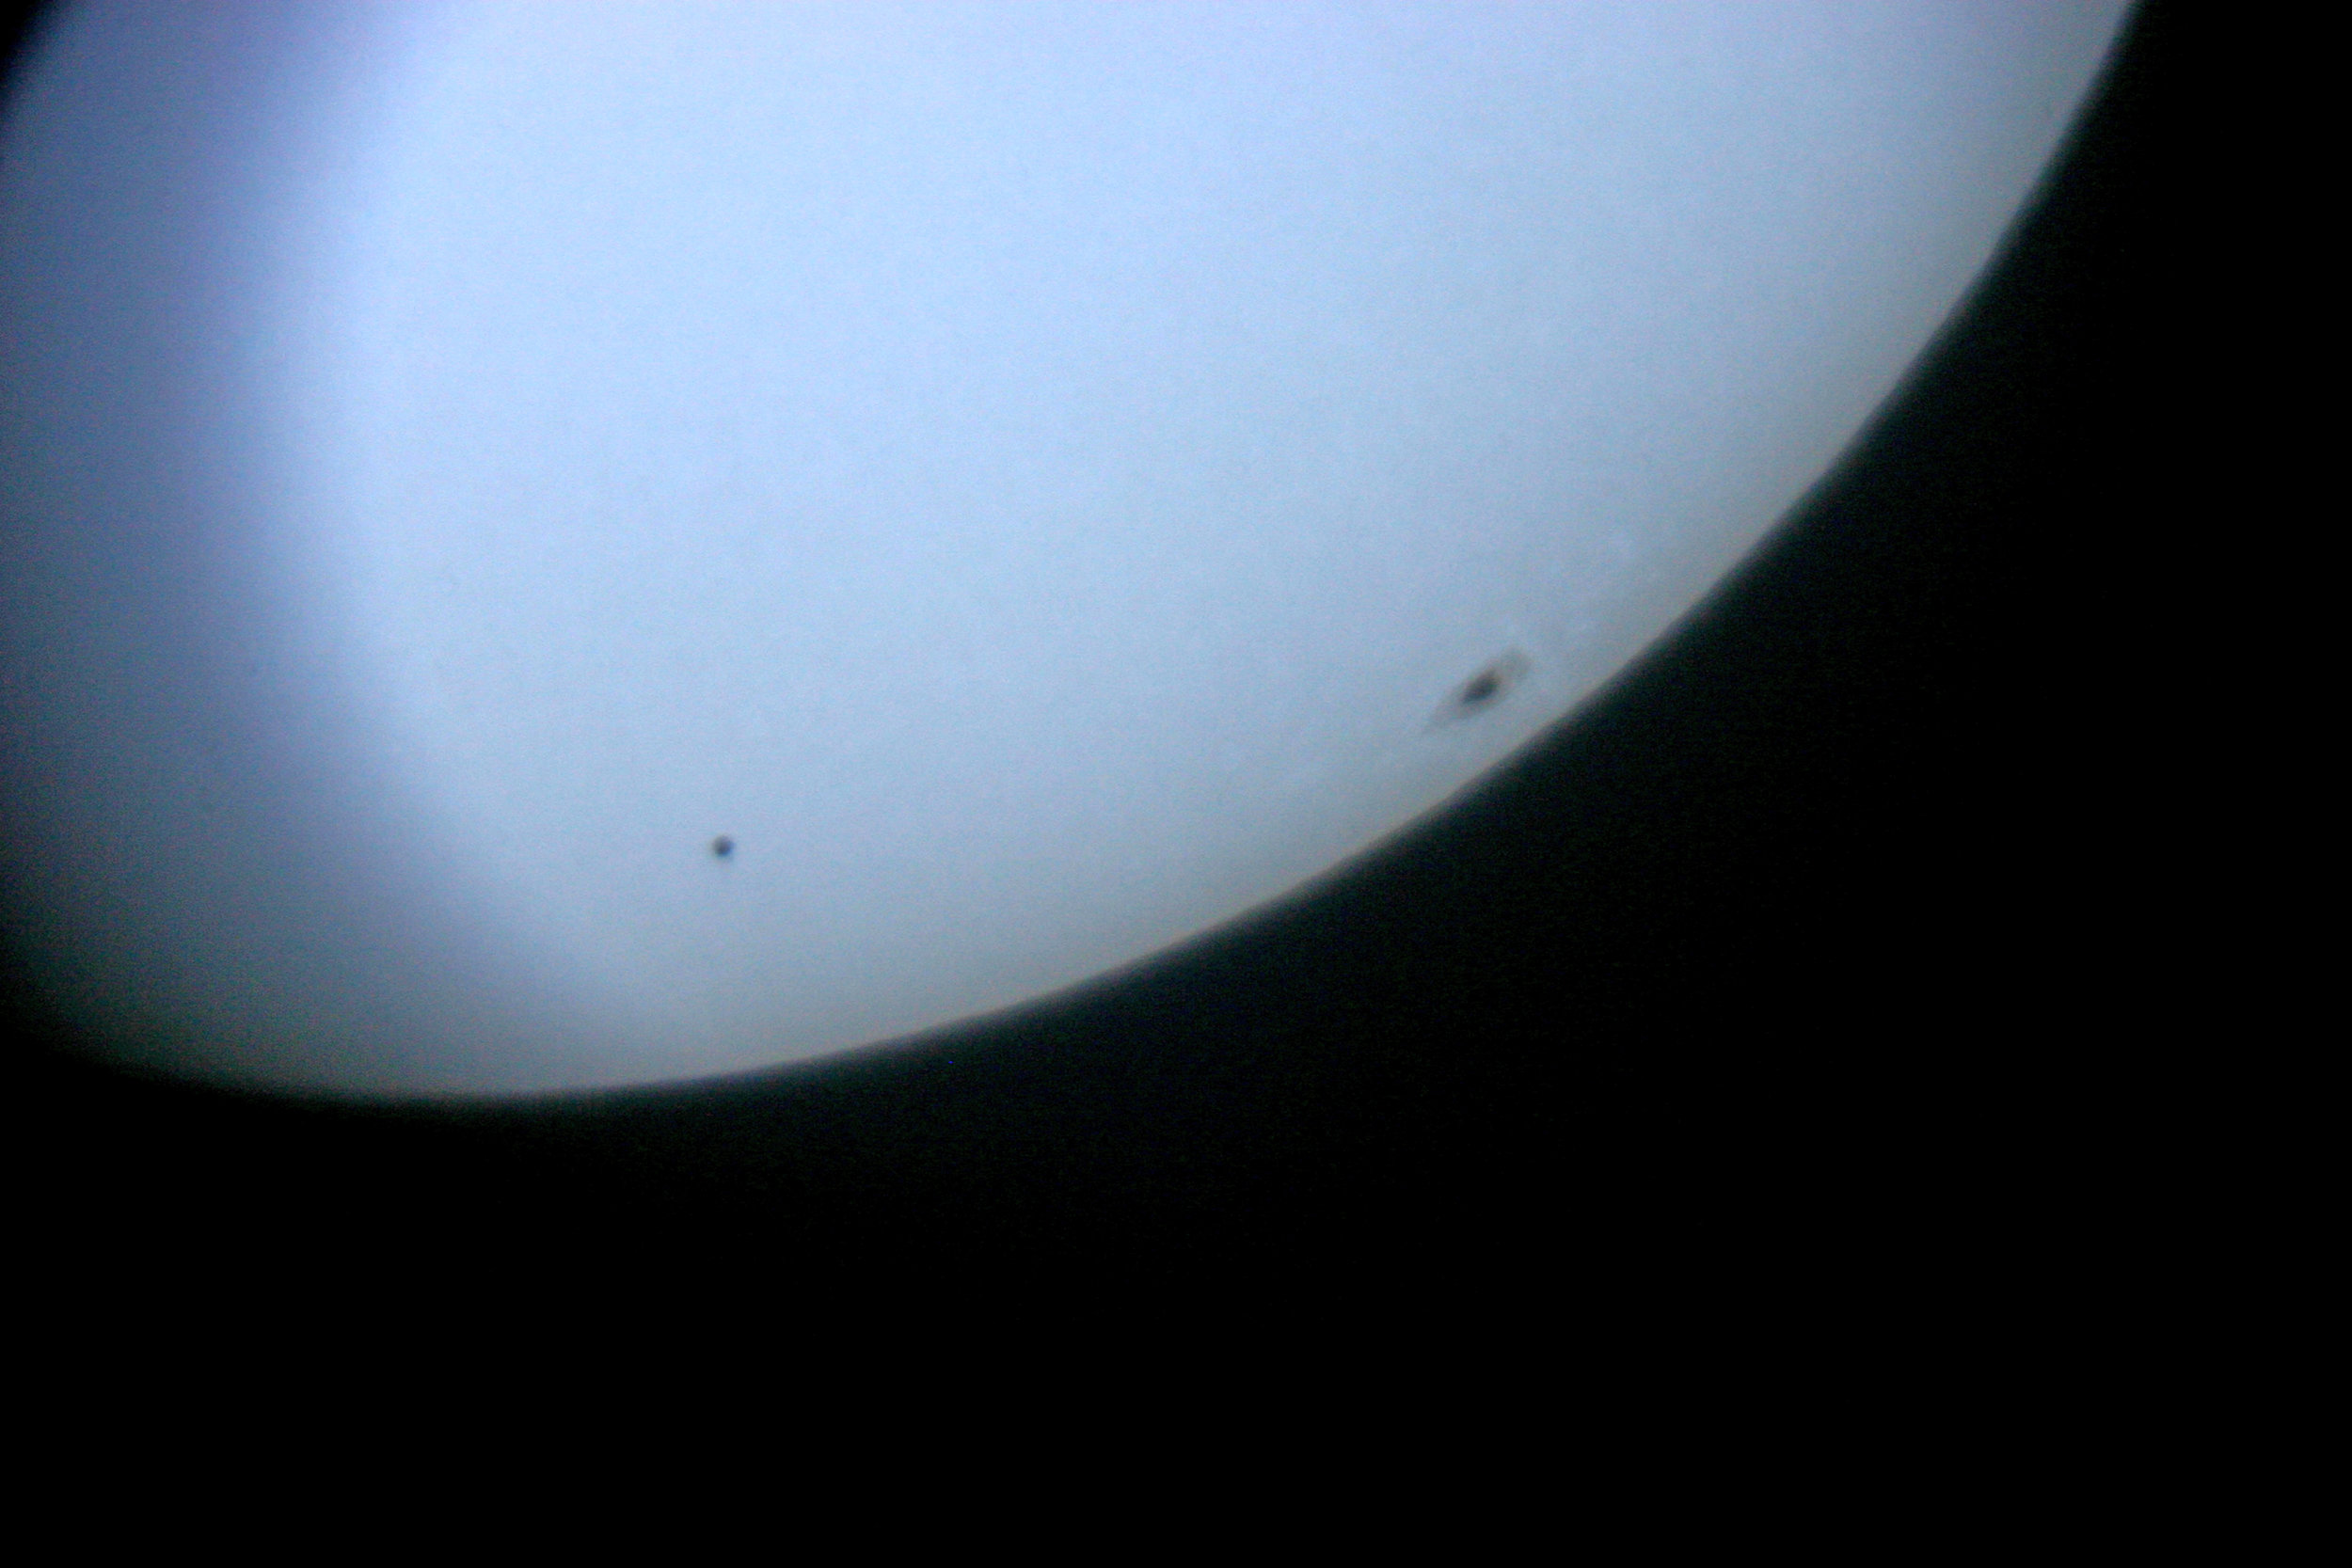 Mercury transit across the Sun viewed from Hilo, Hawaii 2006